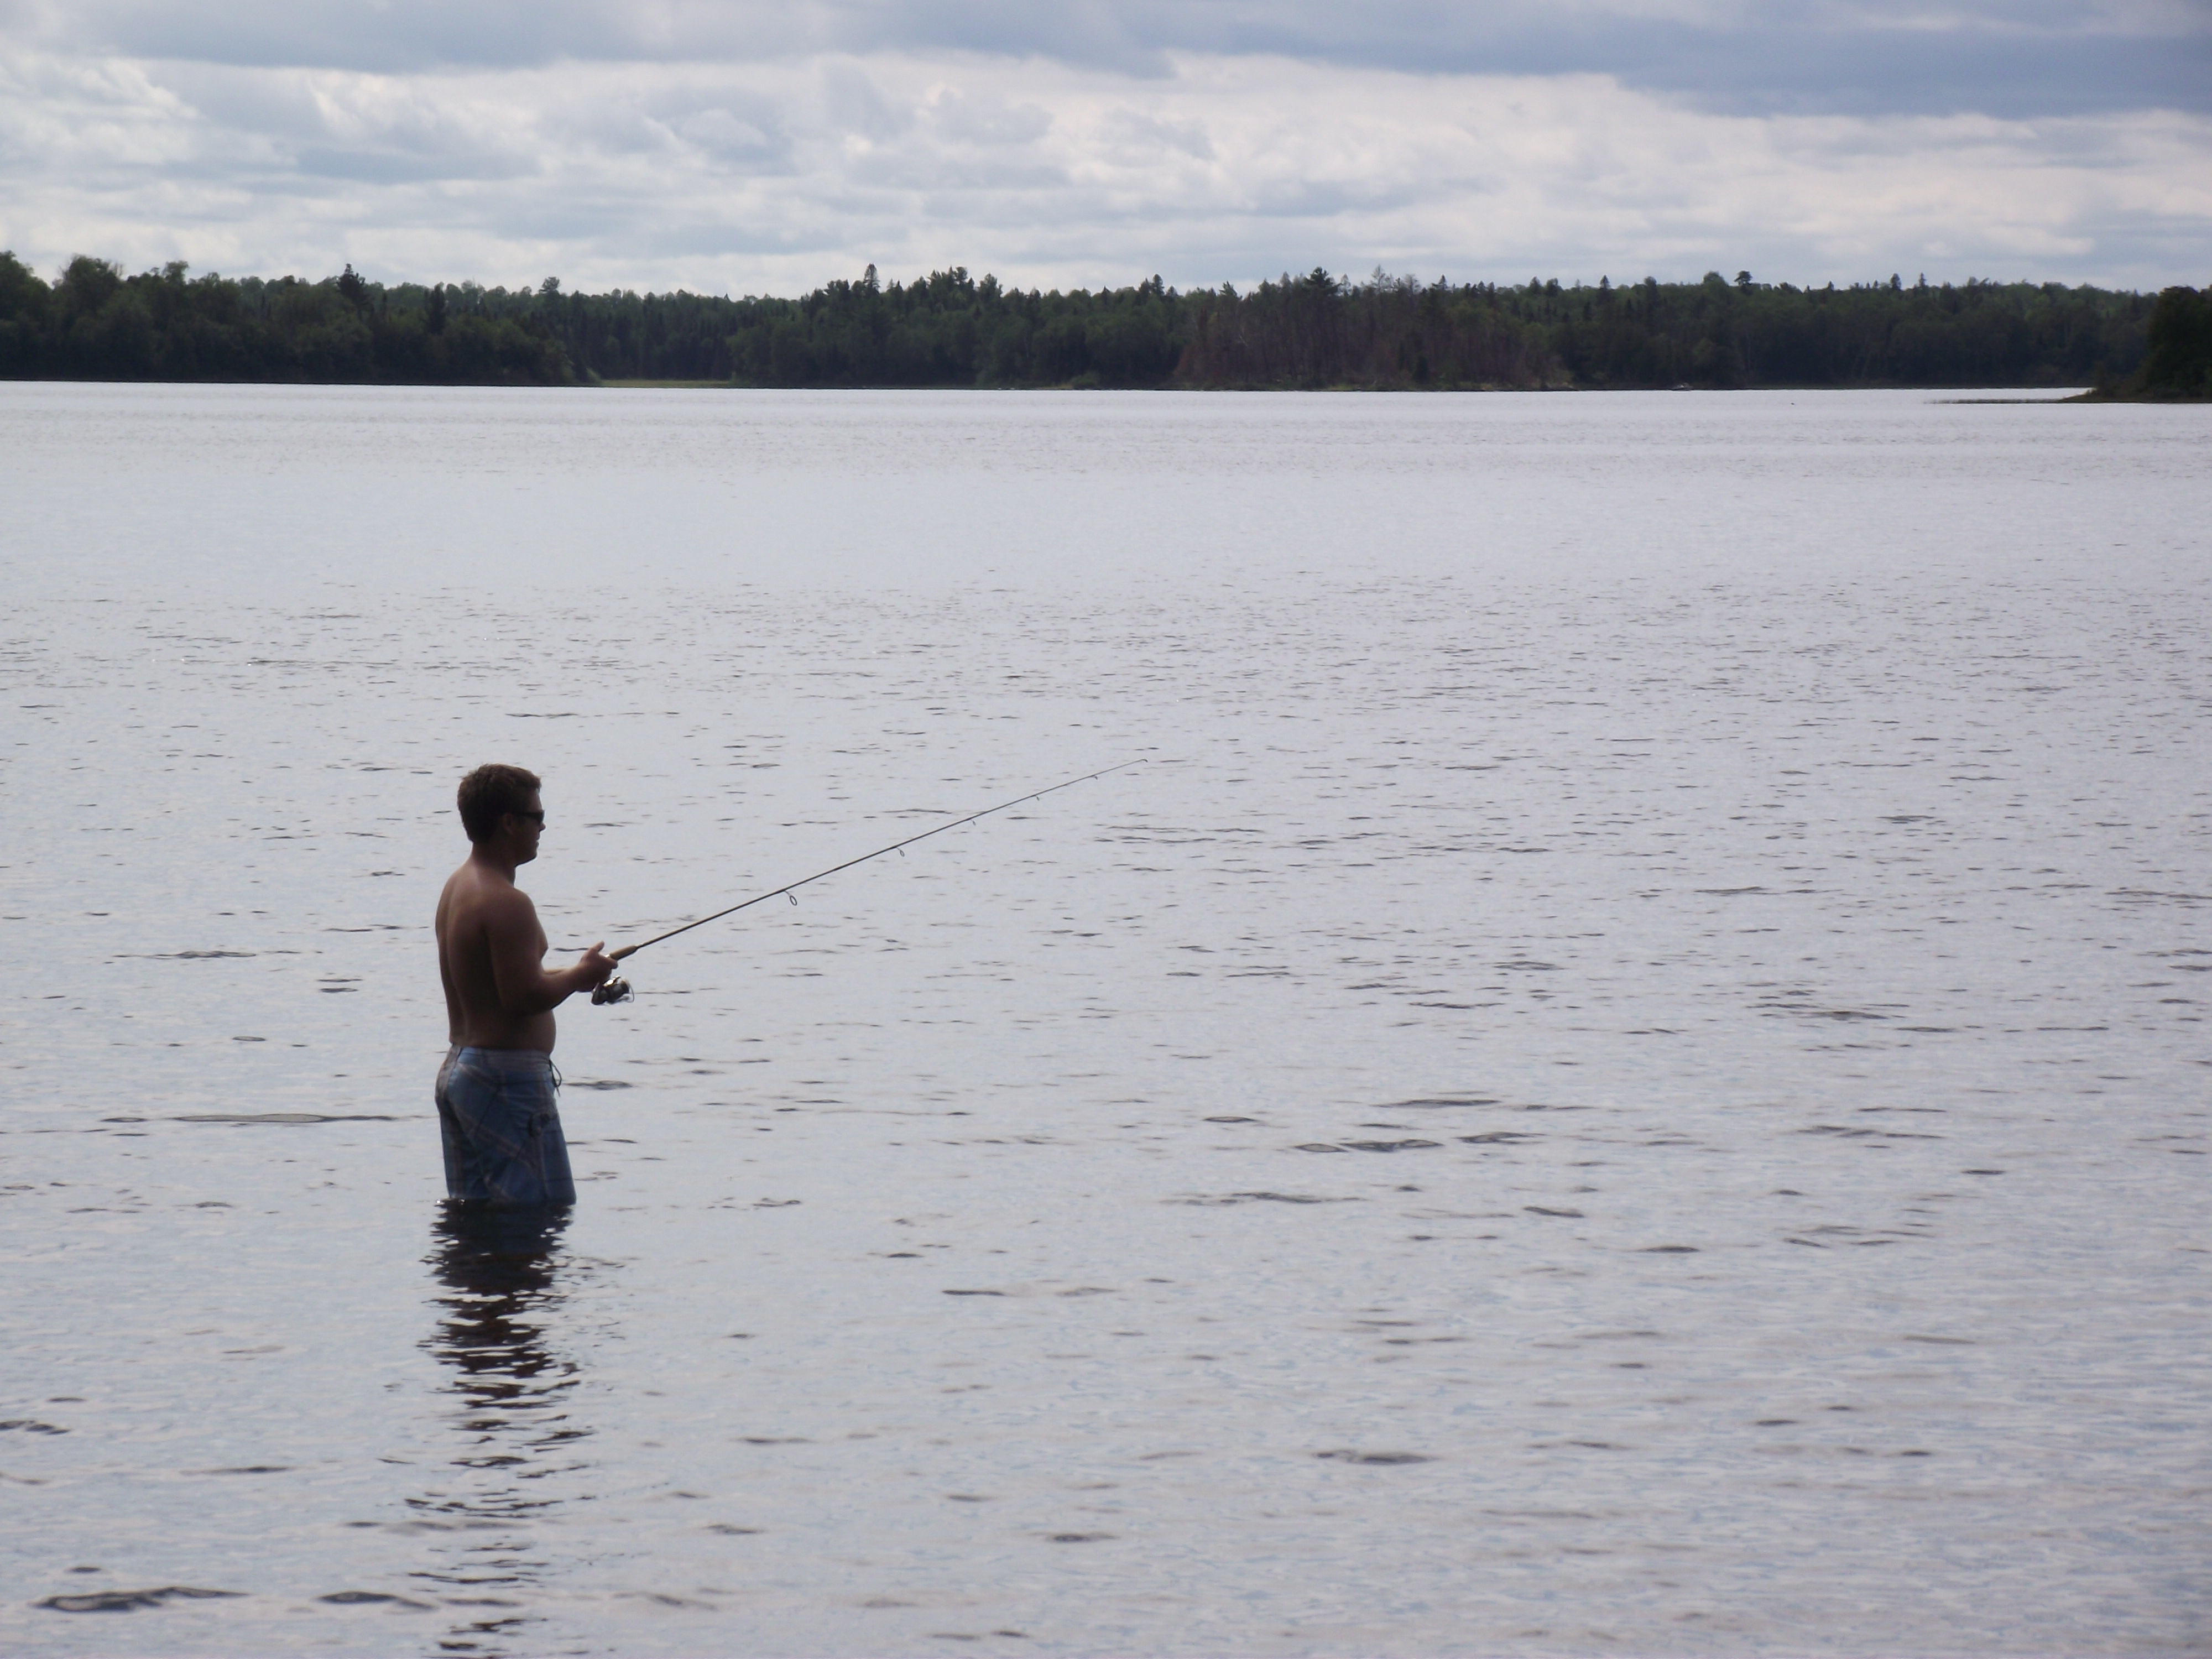 Lone fishing person